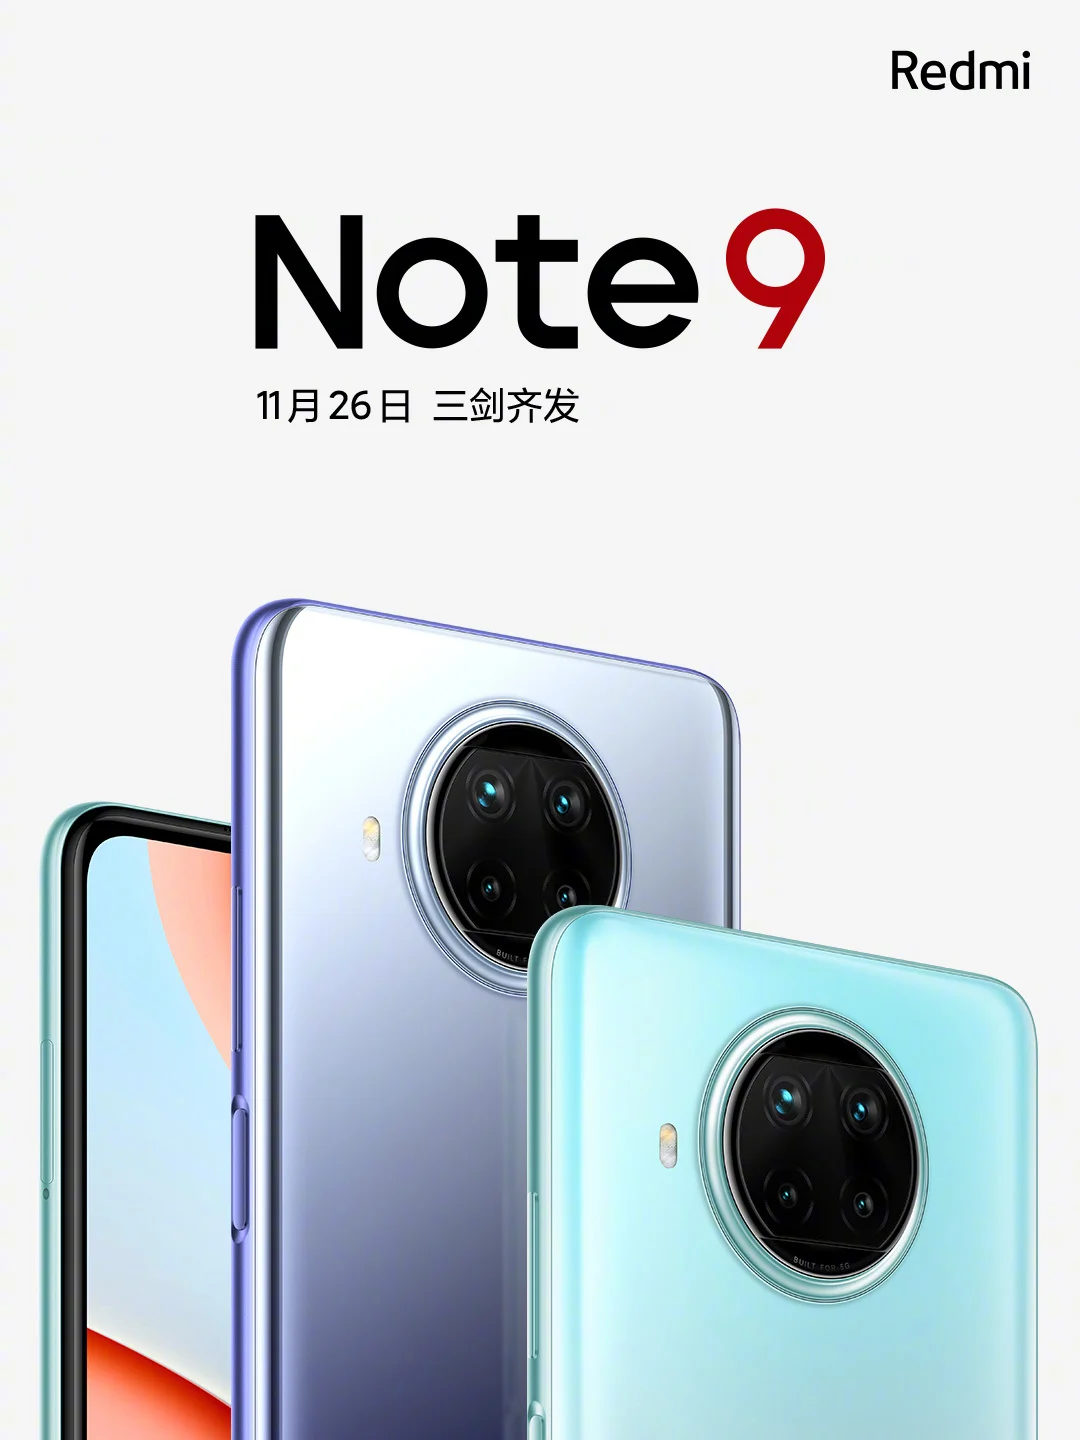 Официально: серия Redmi Note 9 5G выйдет 26 ноября (Redmi Note 9 5G launch date is November 26)